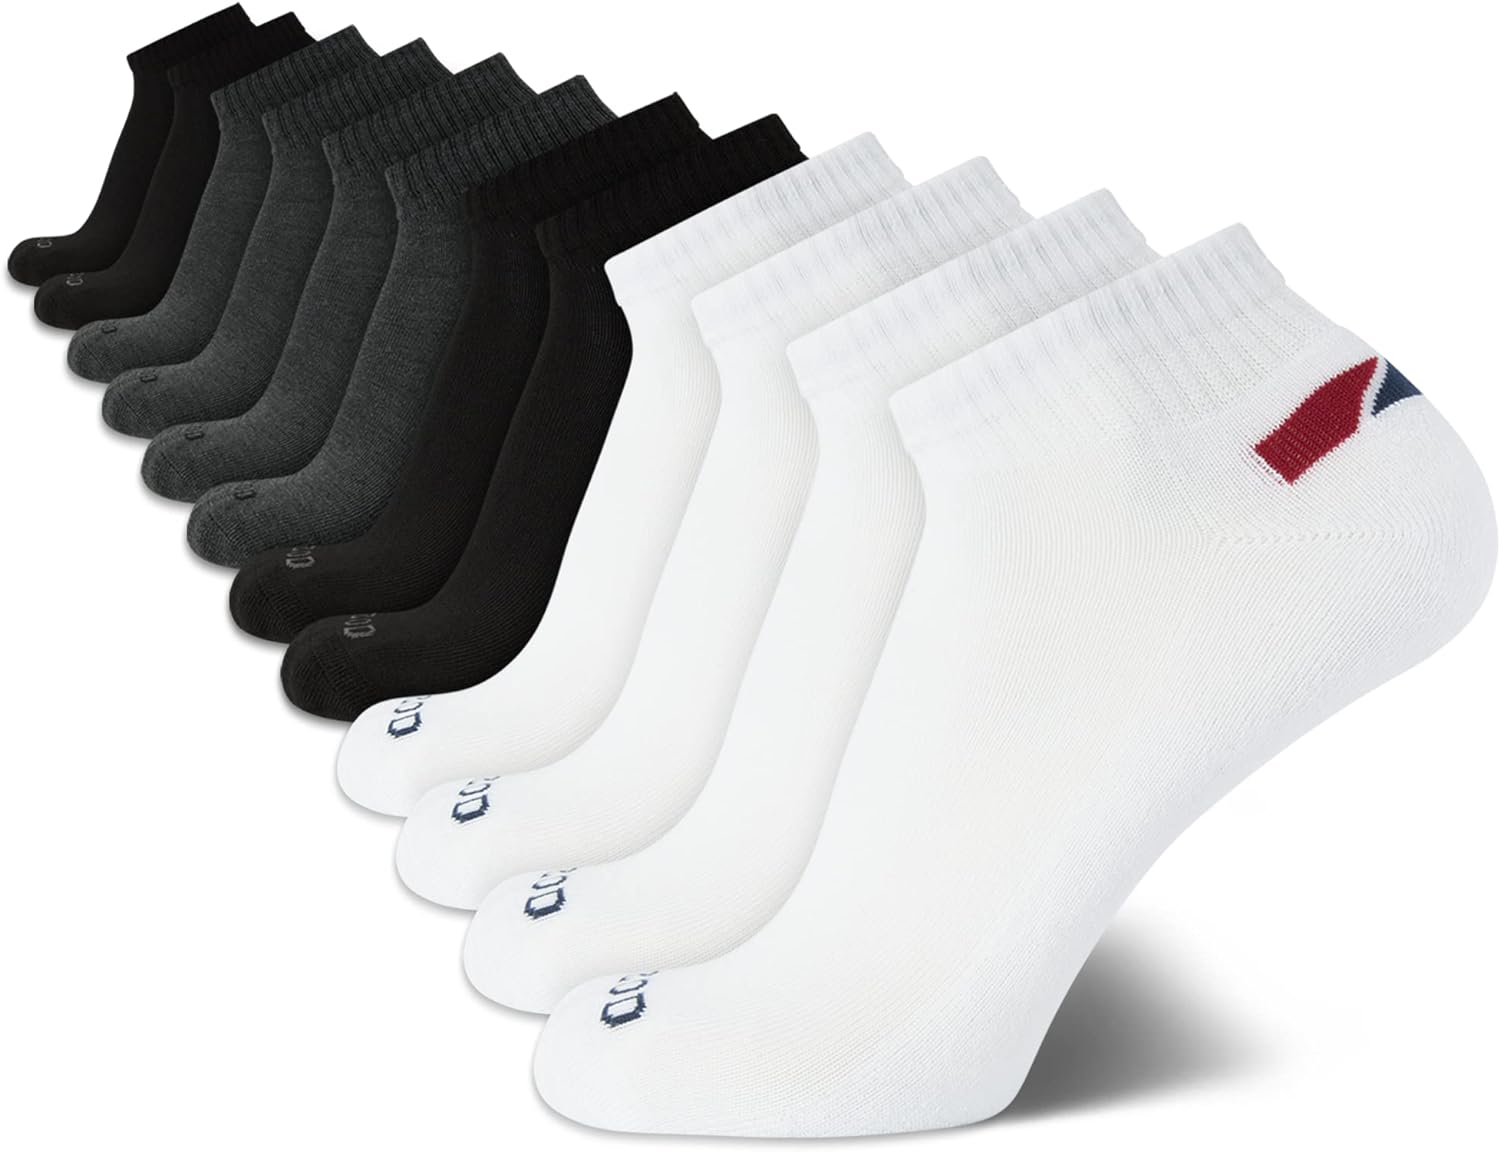 IZOD Men' Athletic Socks - Performance Cushion Quarter Socks (10 or 12 Pack)